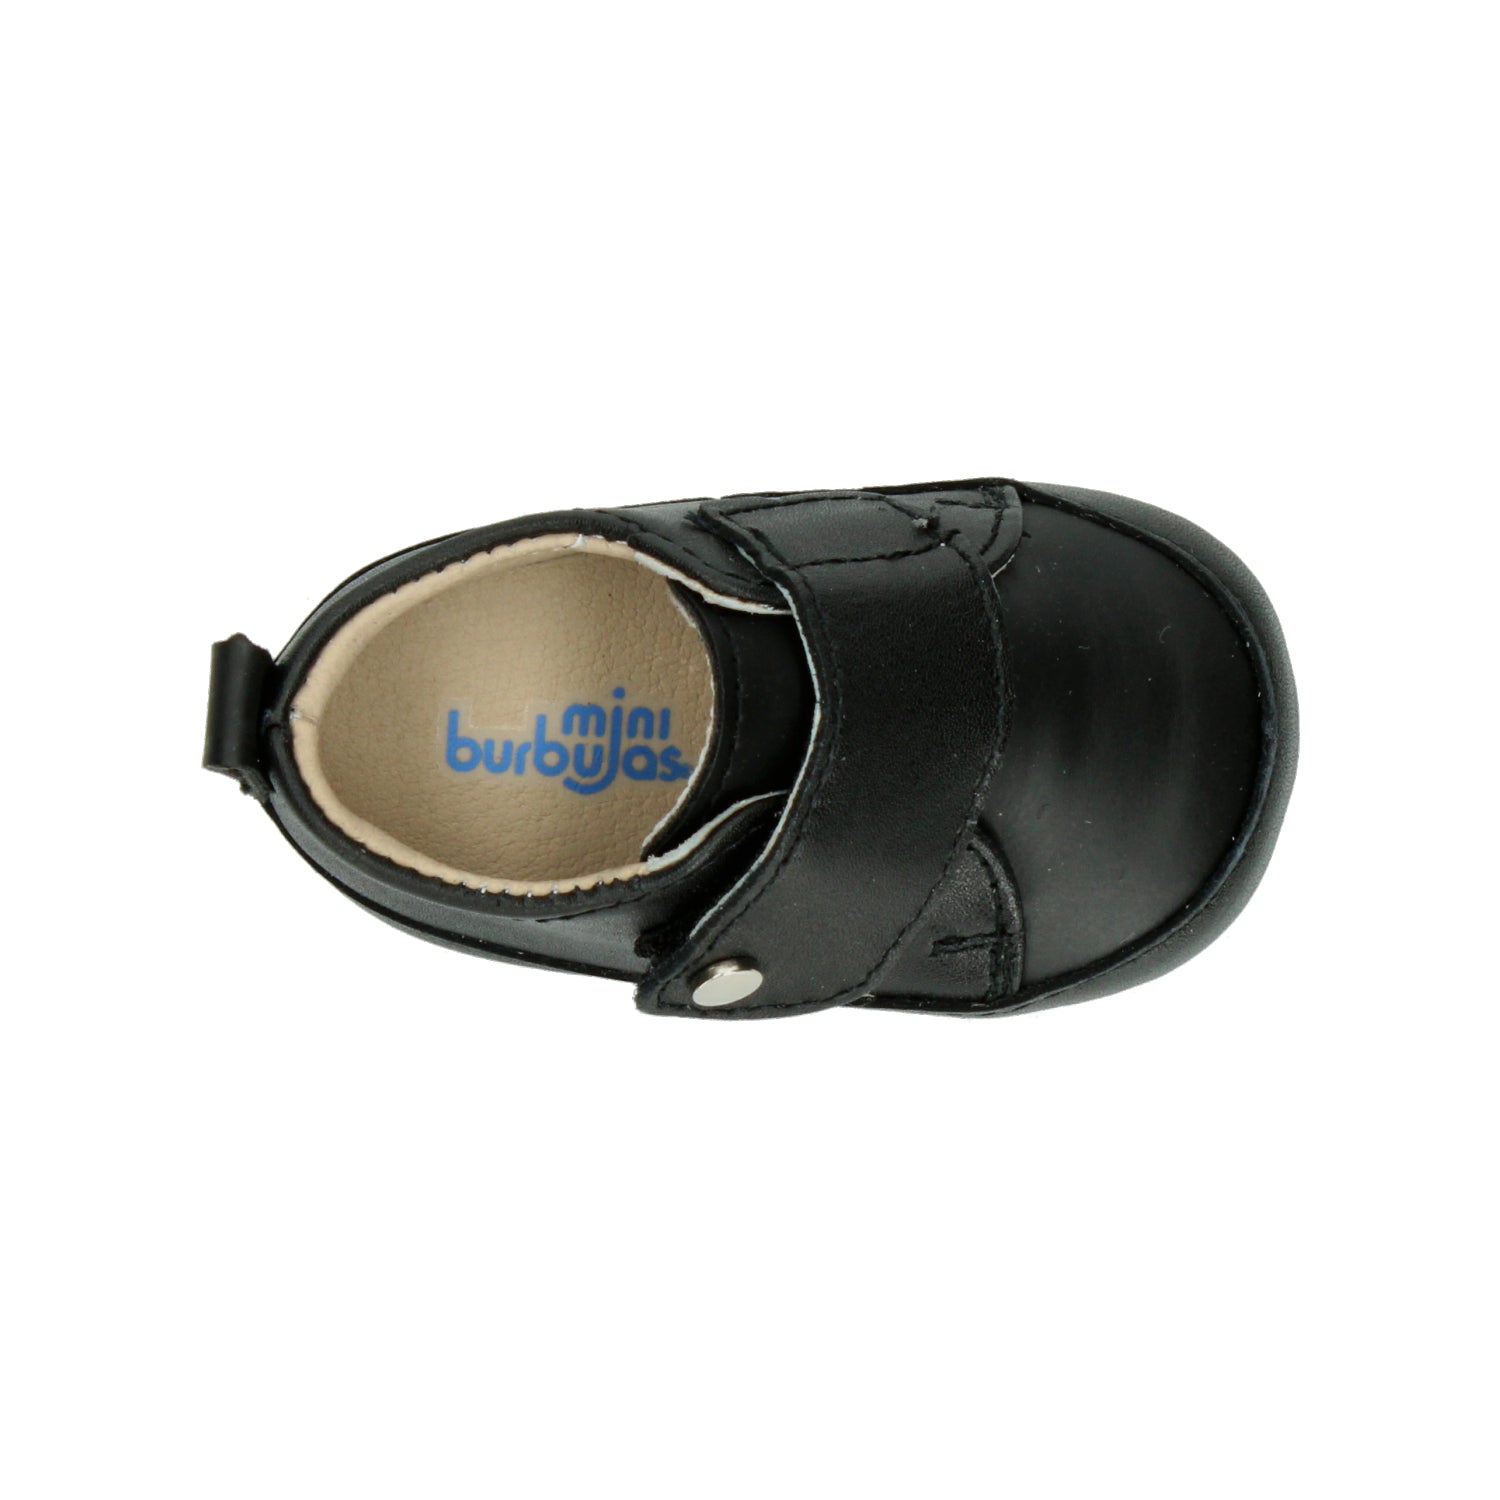 Zapato Mini burbujas Negro para Niño [MNB259] - Zapaterias Torreon